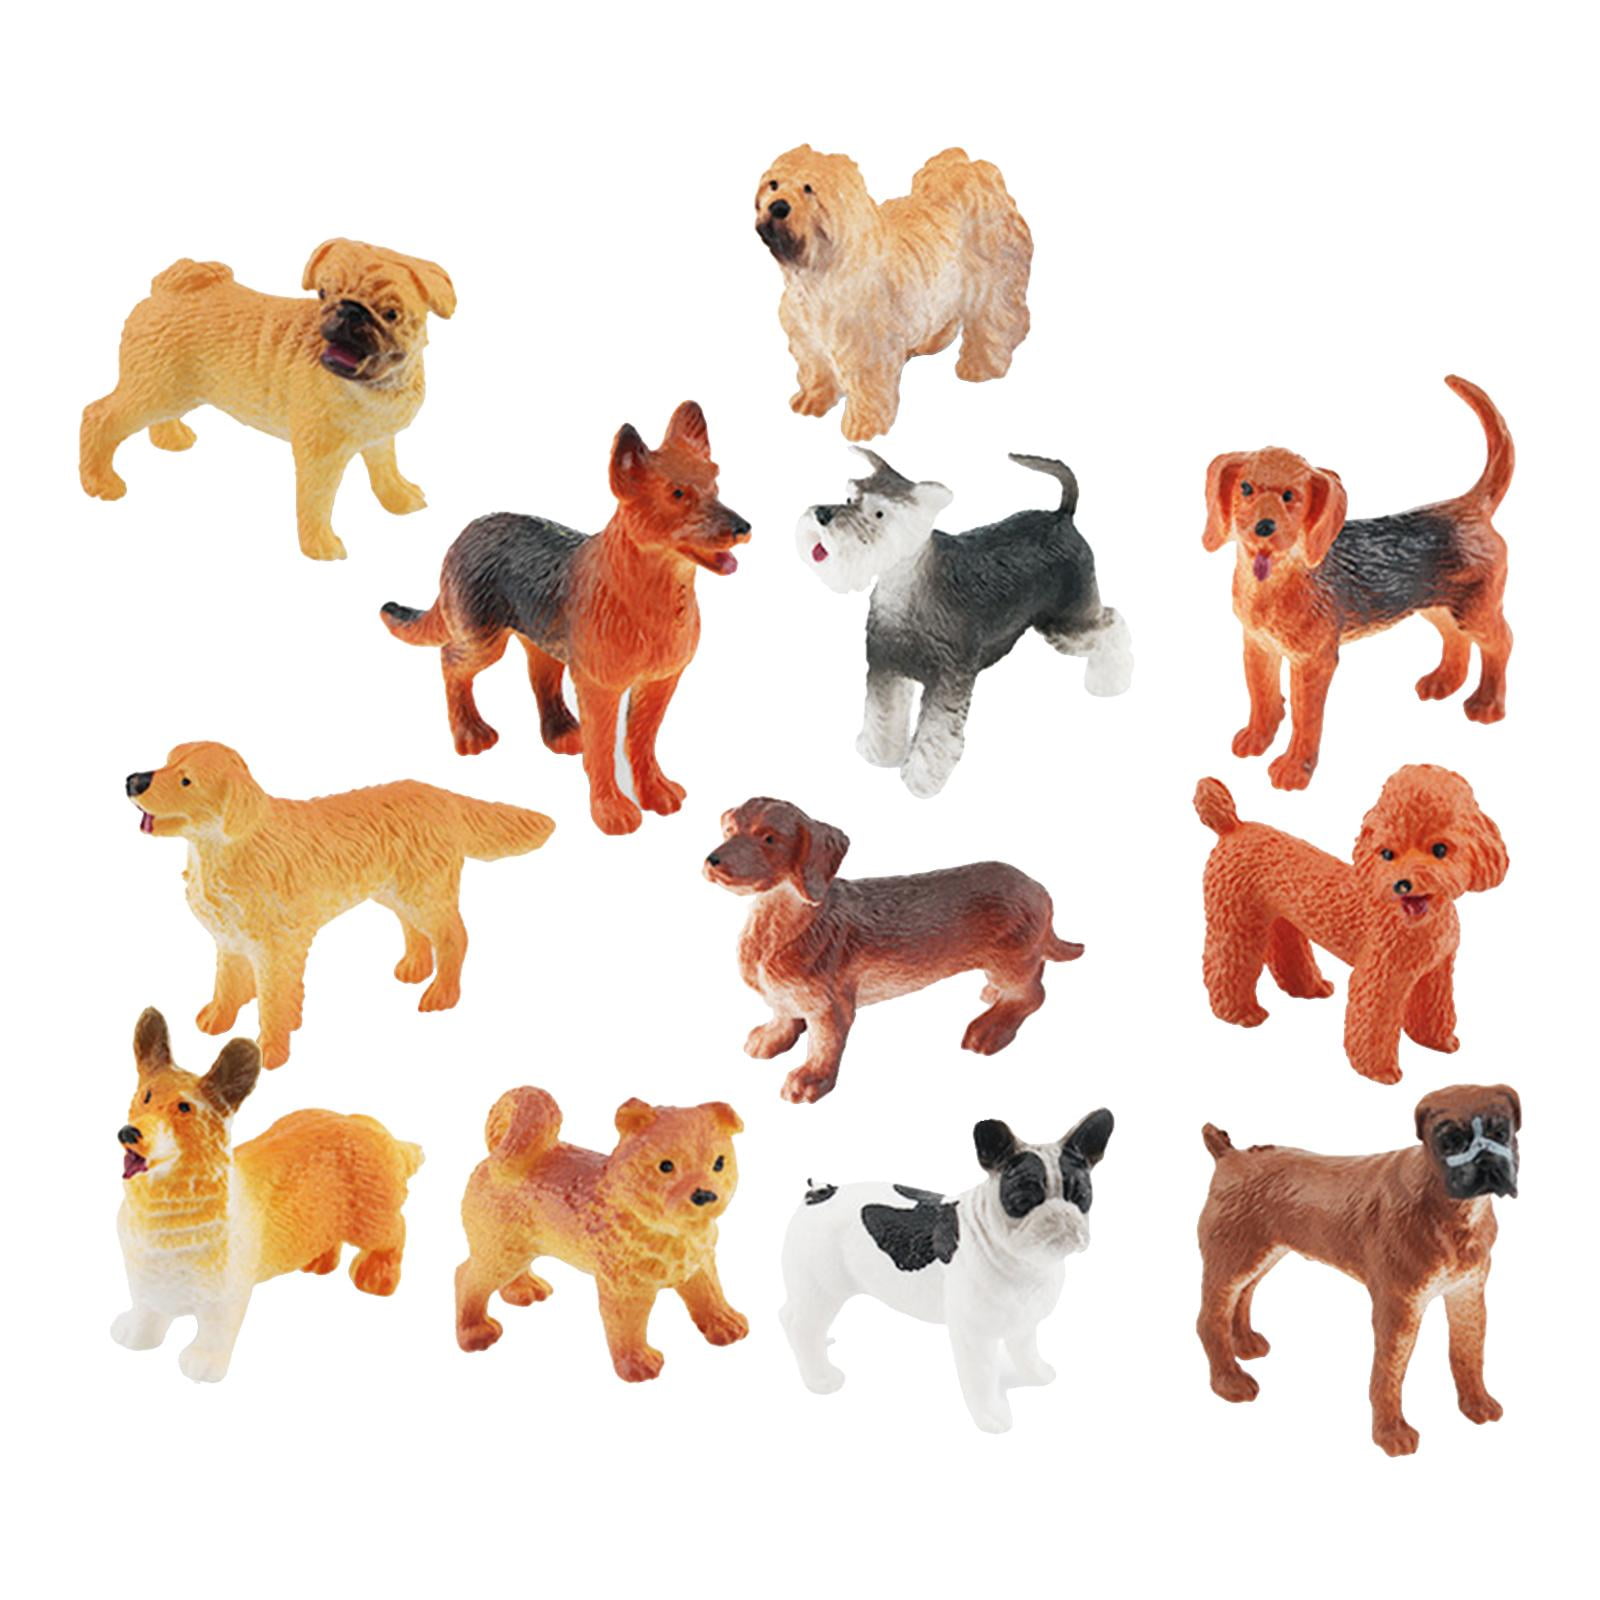 Realistic Plush Dogs - Party Favors - 12 Pieces